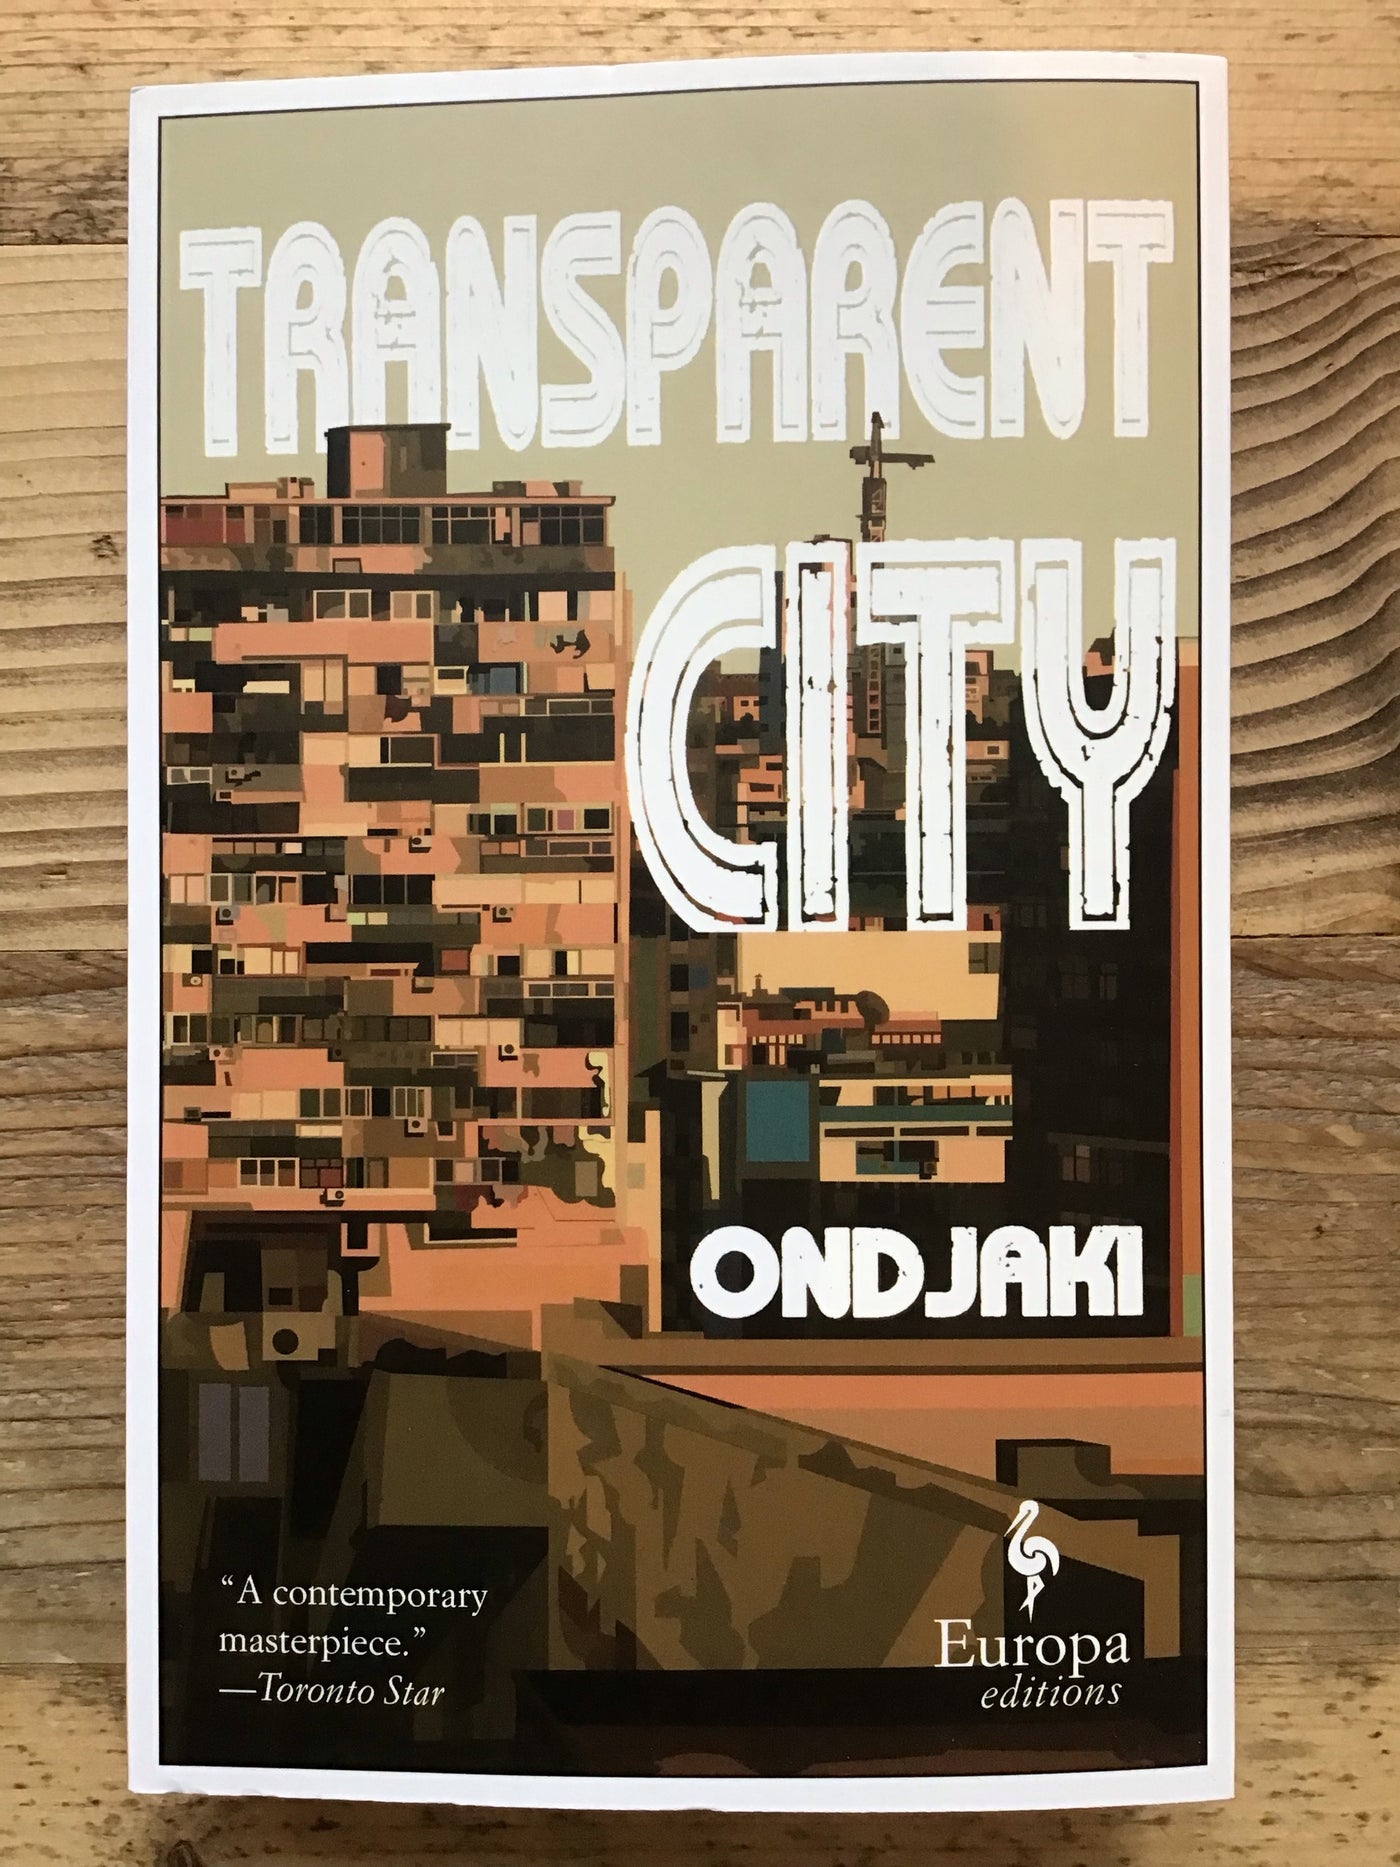 Transparent City